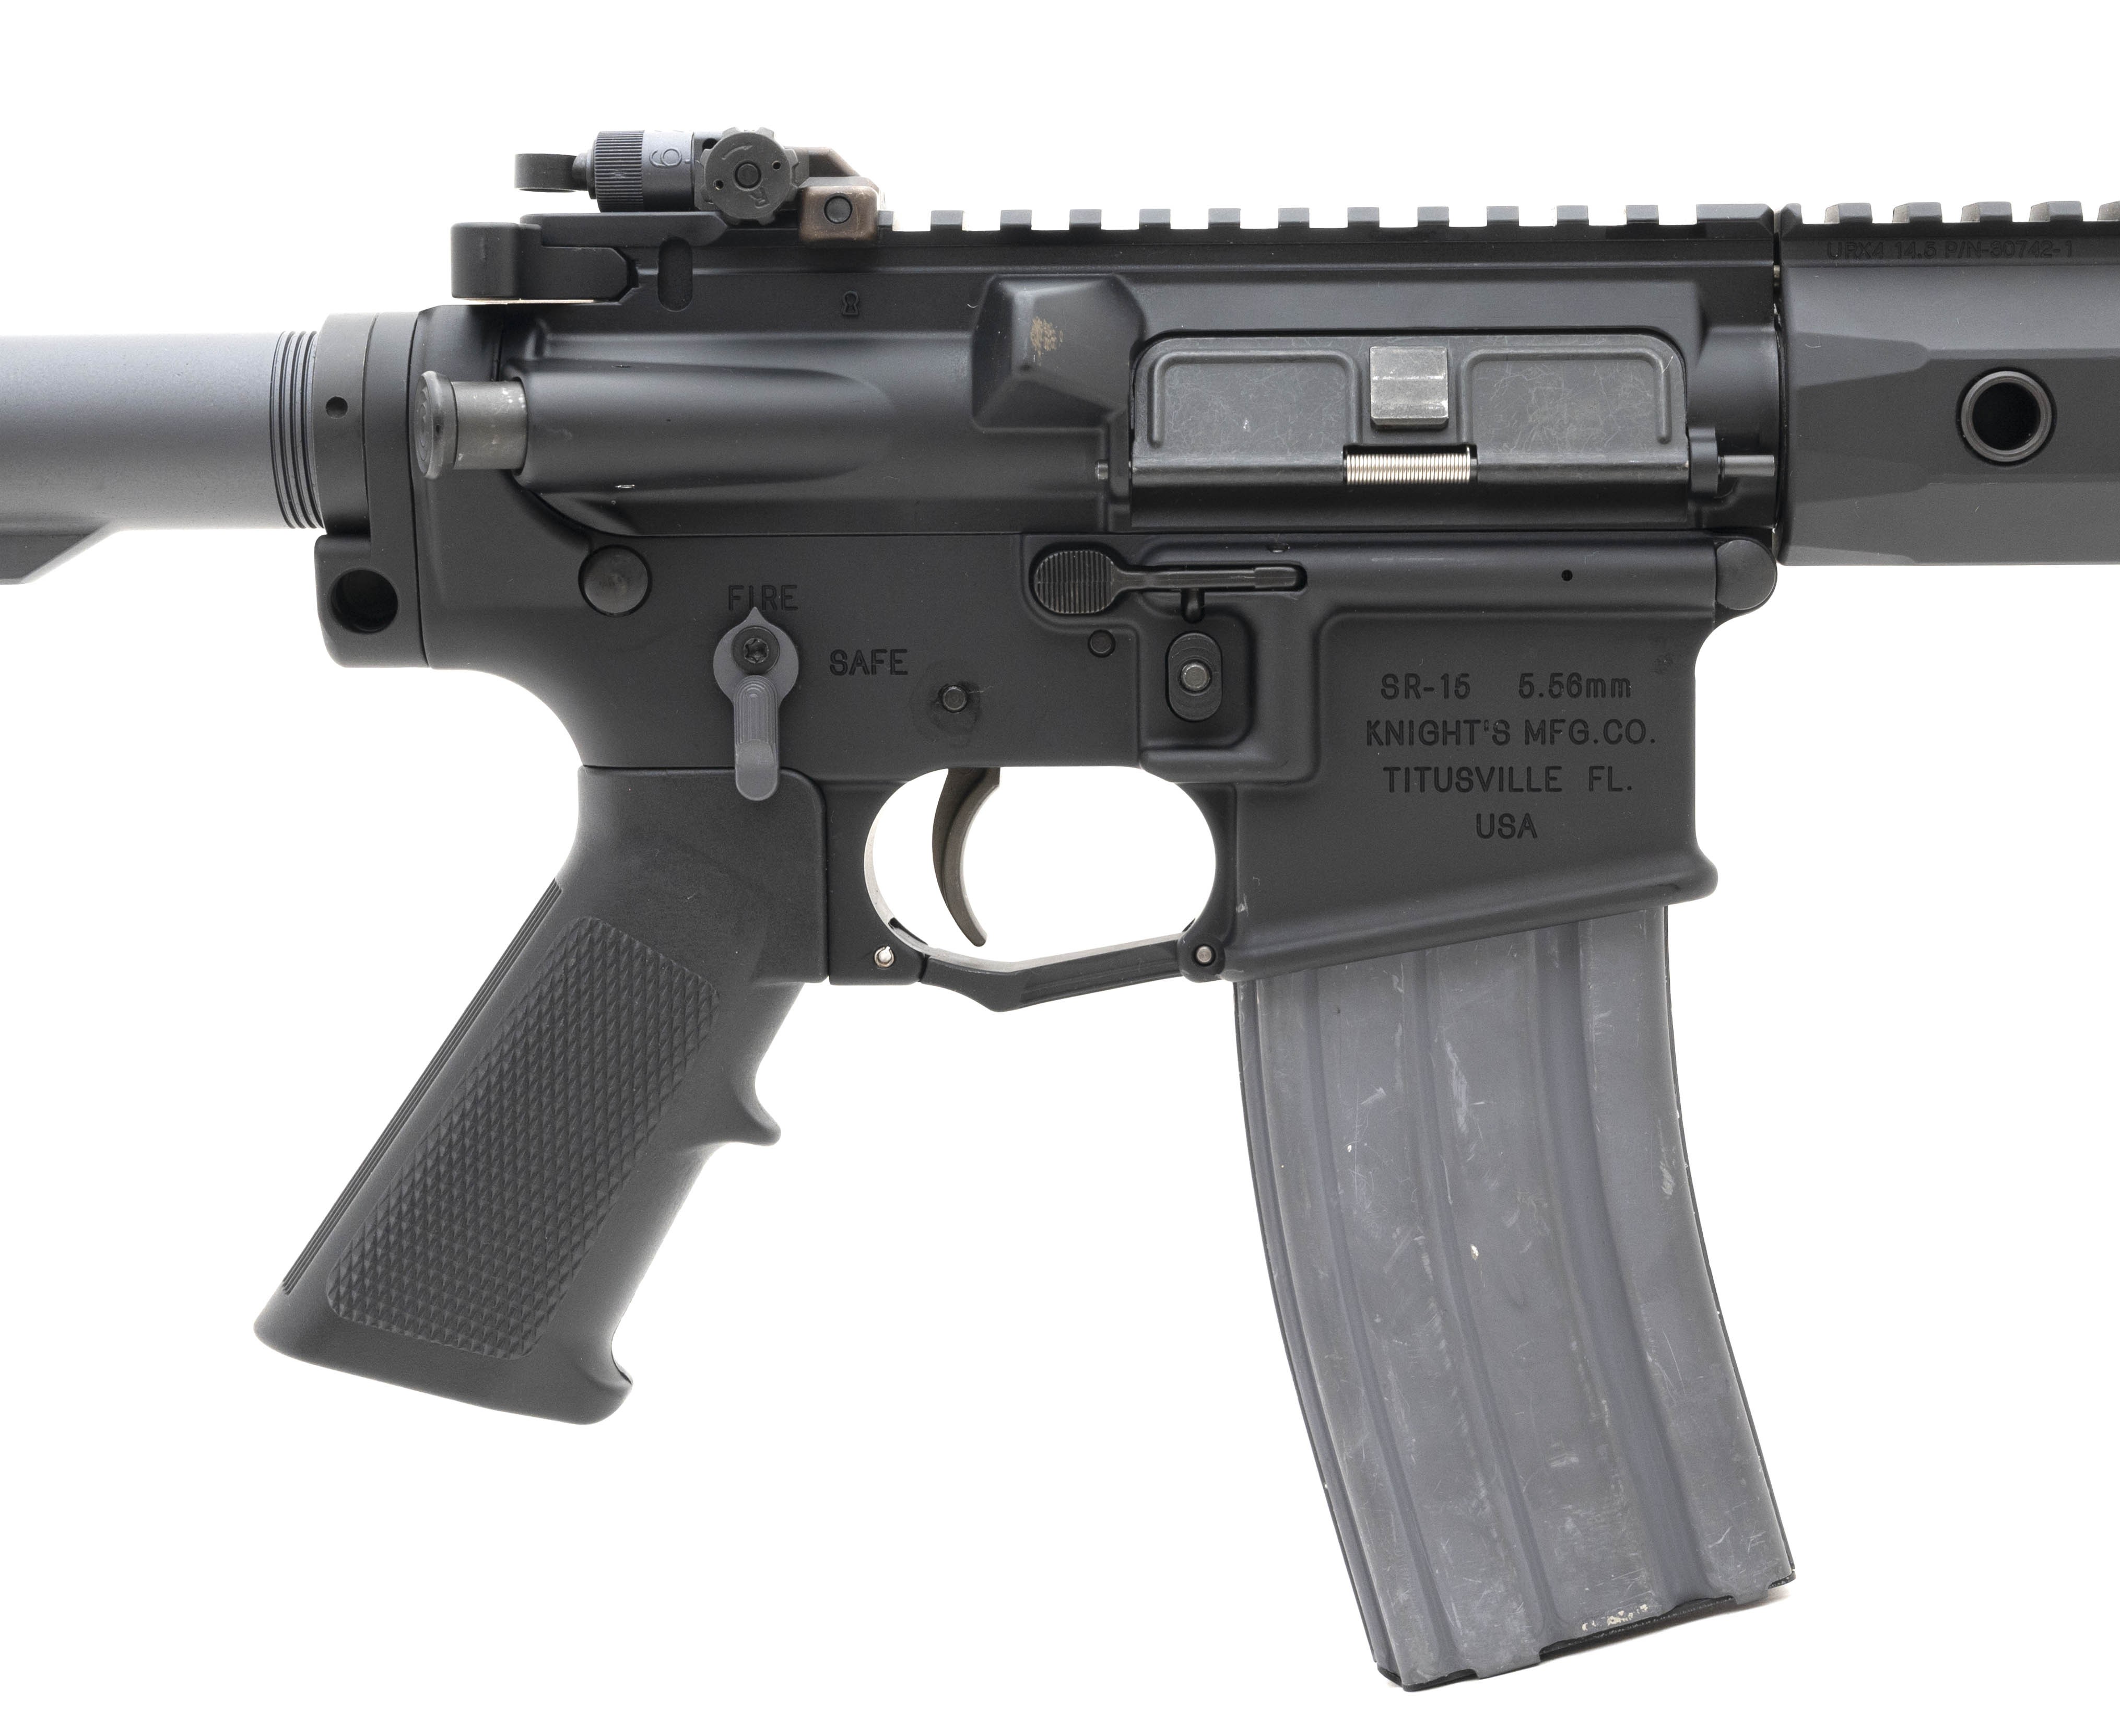 KAC Knights SR-15 Mod 2 5.56 NATO caliber rifle for sale.